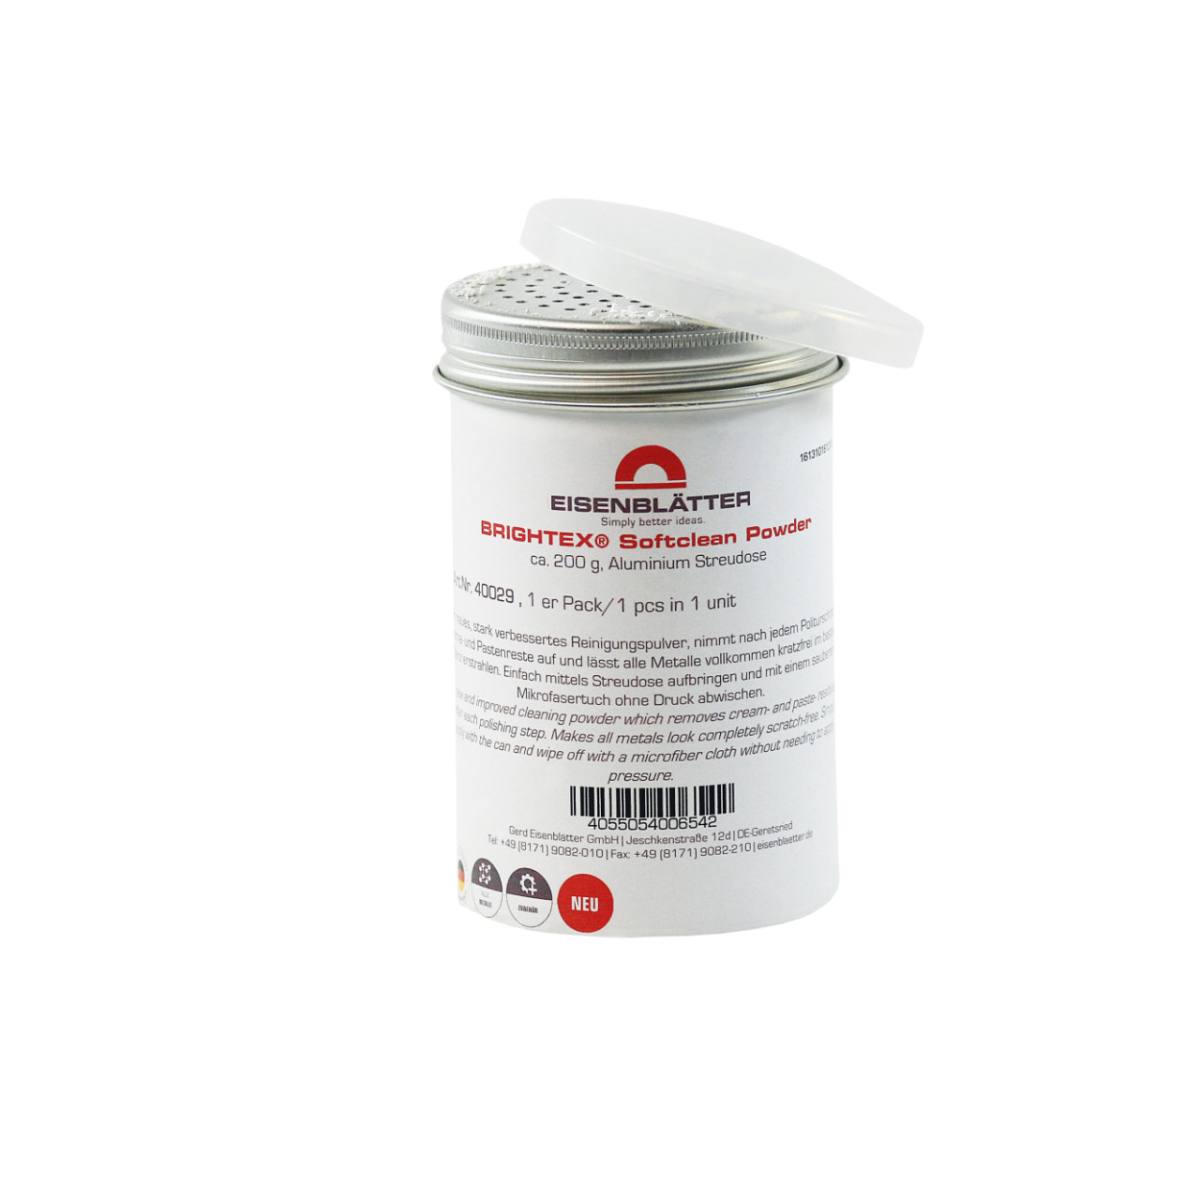 BRIGHTEX Softclean Powder, ca. 200 g, Aluminium Streudose